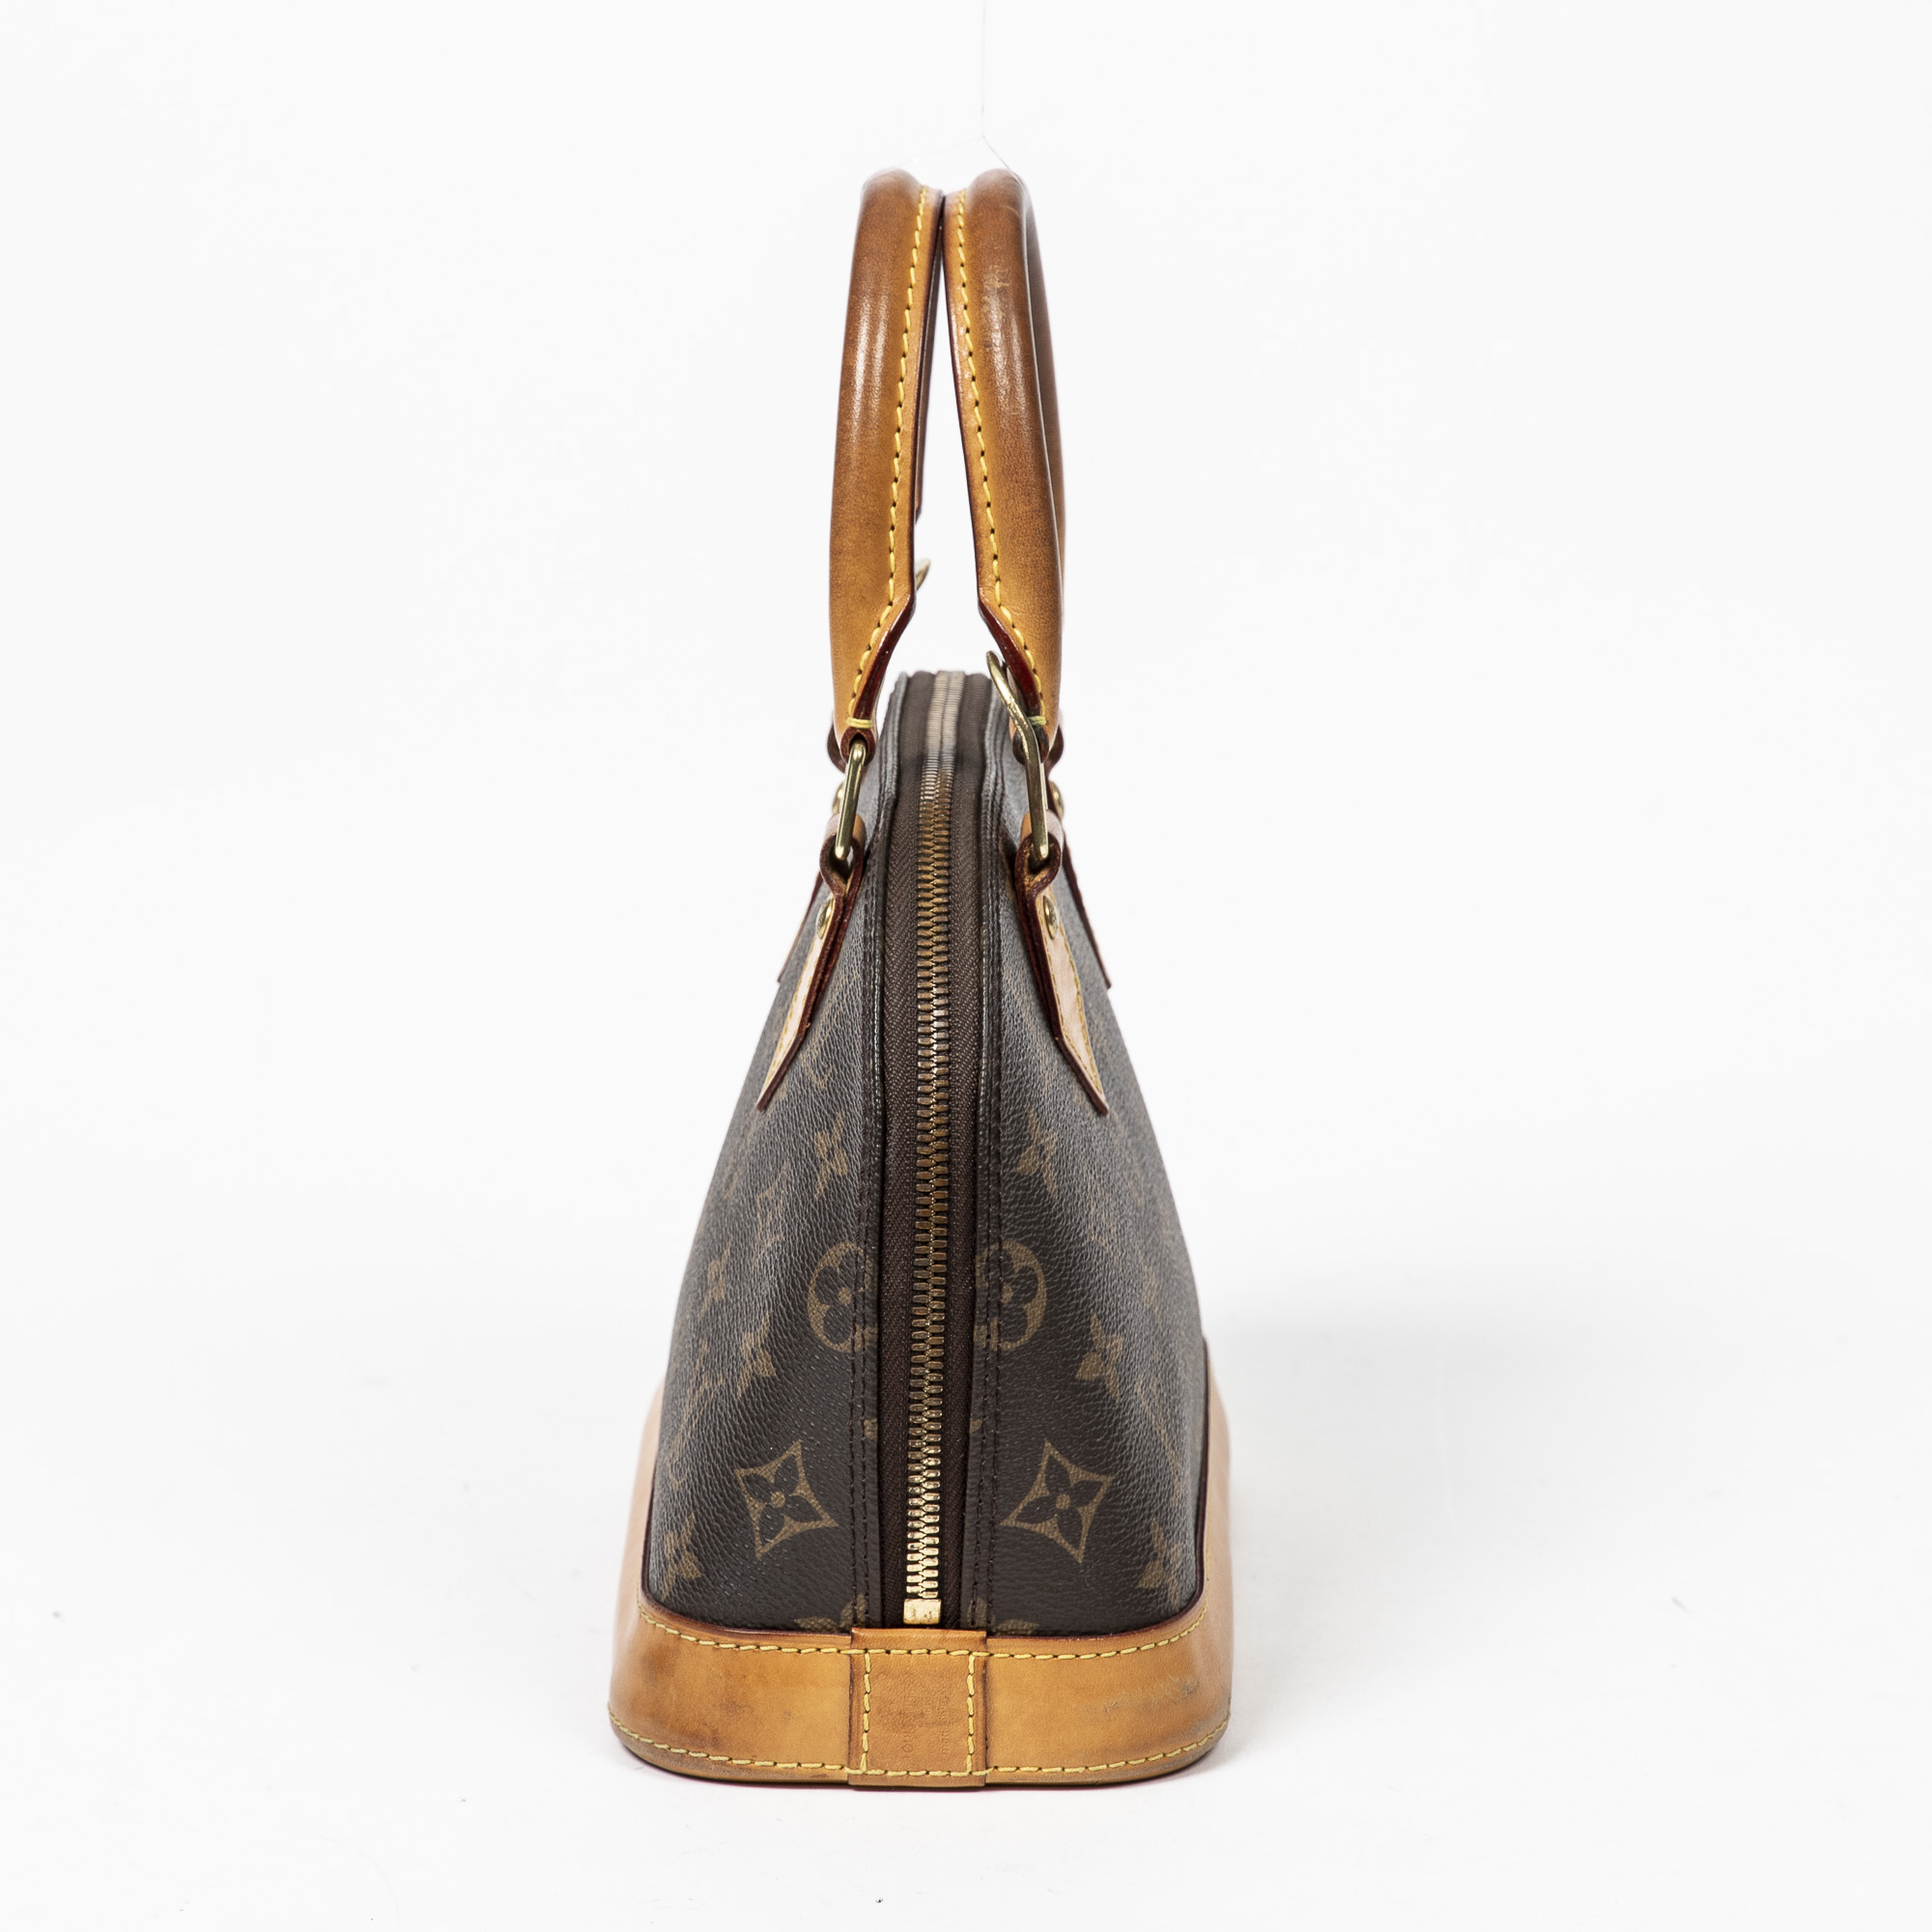 Sold at Auction: Louis Vuitton, Louis Vuitton Navy Monogram Garden